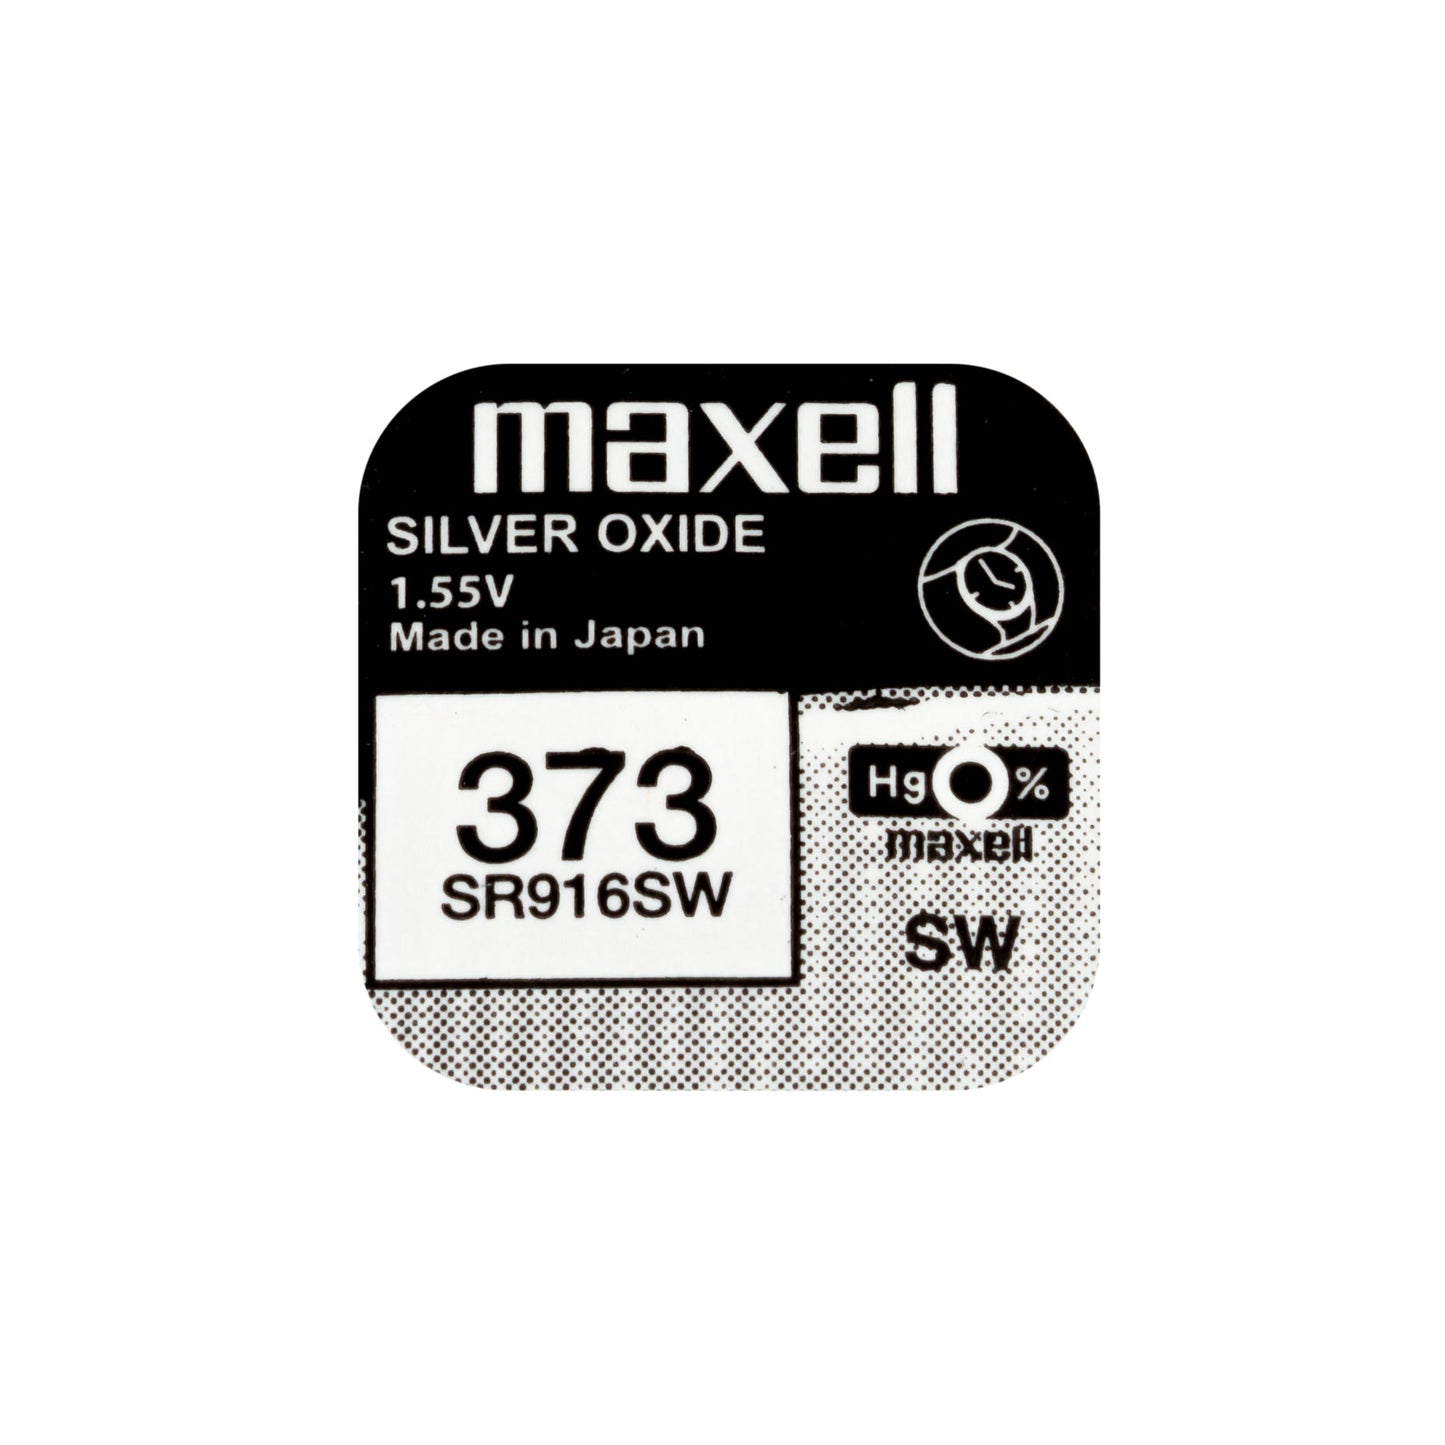 Maxell SR916SW (373) Silver Oxide Watch Batteries